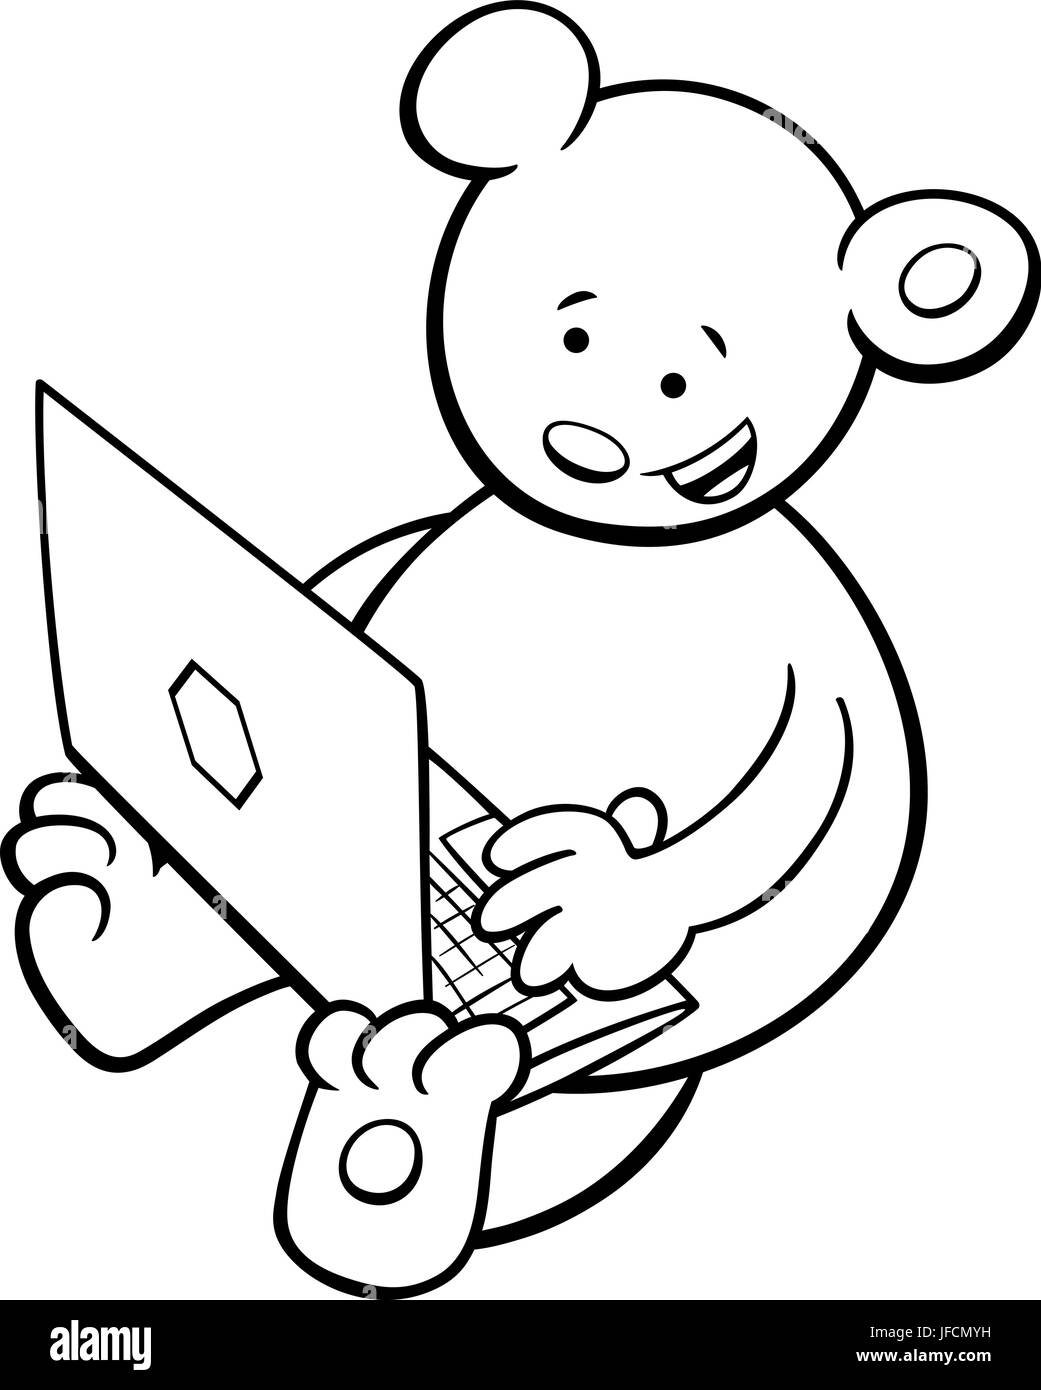 Schwarz / Weiß Cartoon Illustration der Bär Fantasy Tier Charakter mit Laptop oder Notebook Malbuch Stock Vektor